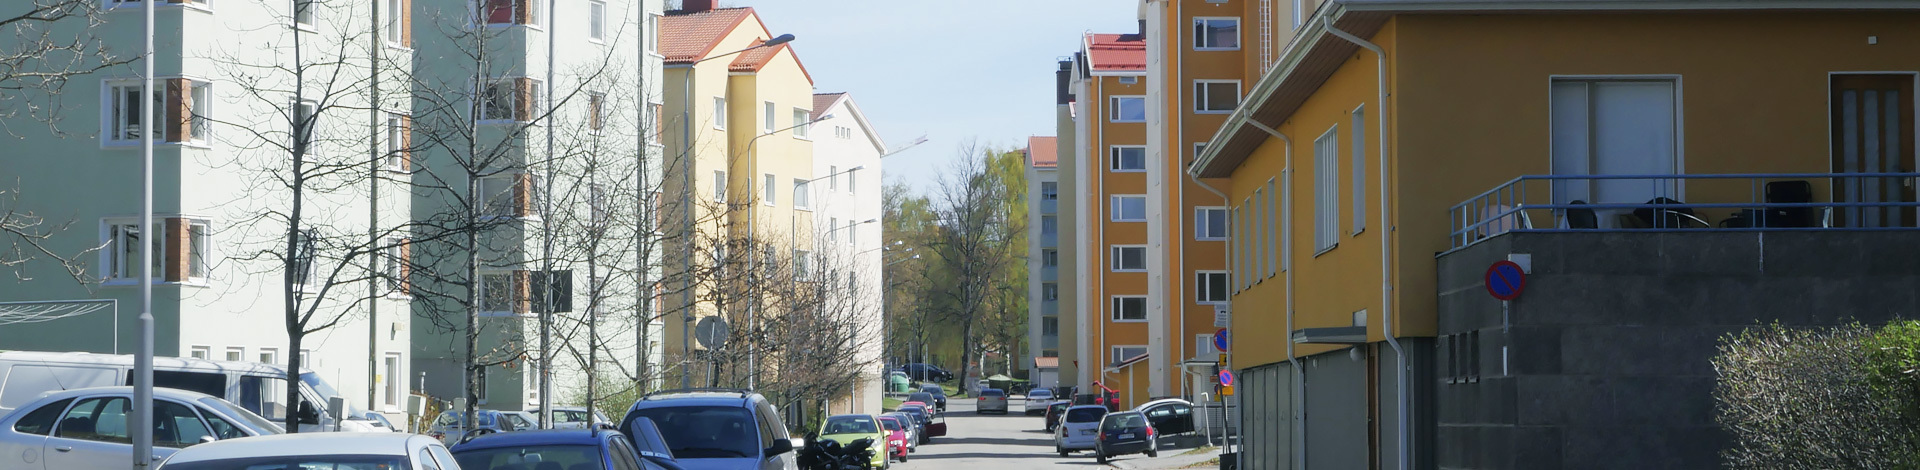 View of Kaleva, Tampere